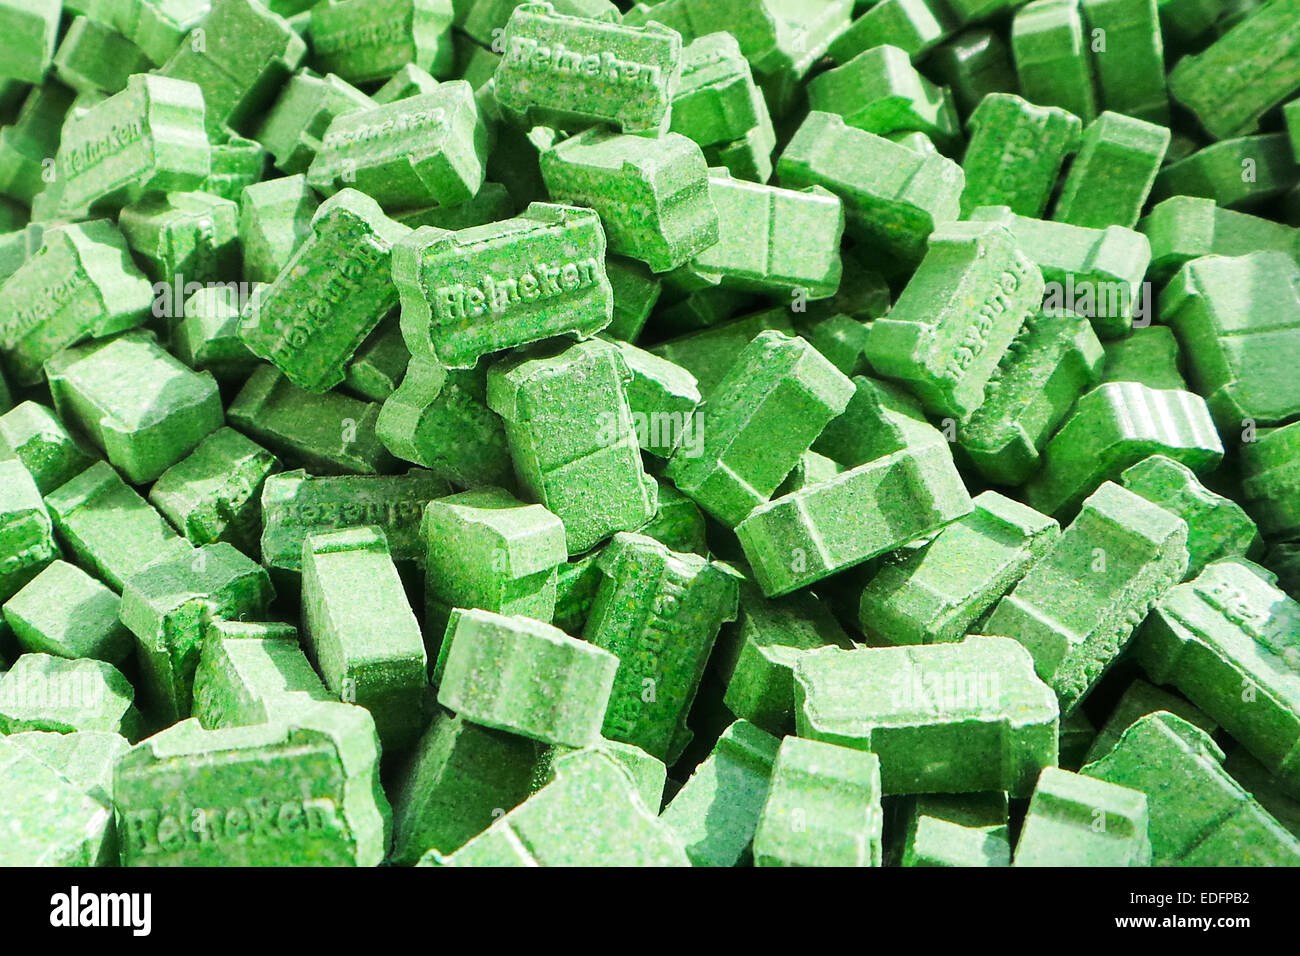 'Green Heineken' Ecstasy pills containing between 200-220mg of MDMA (3,4-methylenedioxy-N-methylamphetamine). Stock Photo